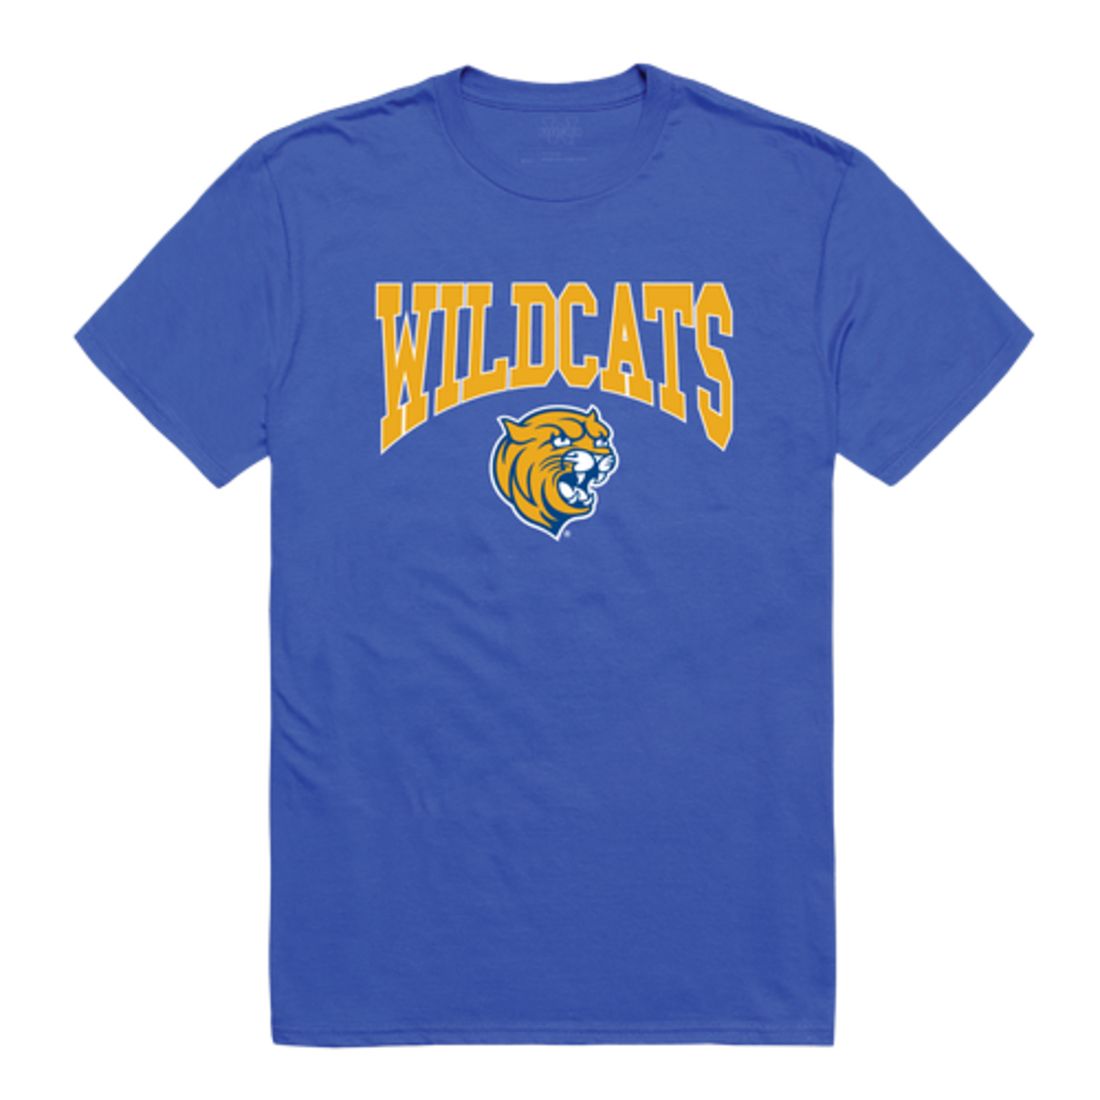 Johnson & Wales University Wildcats Athletic T-Shirt Tee